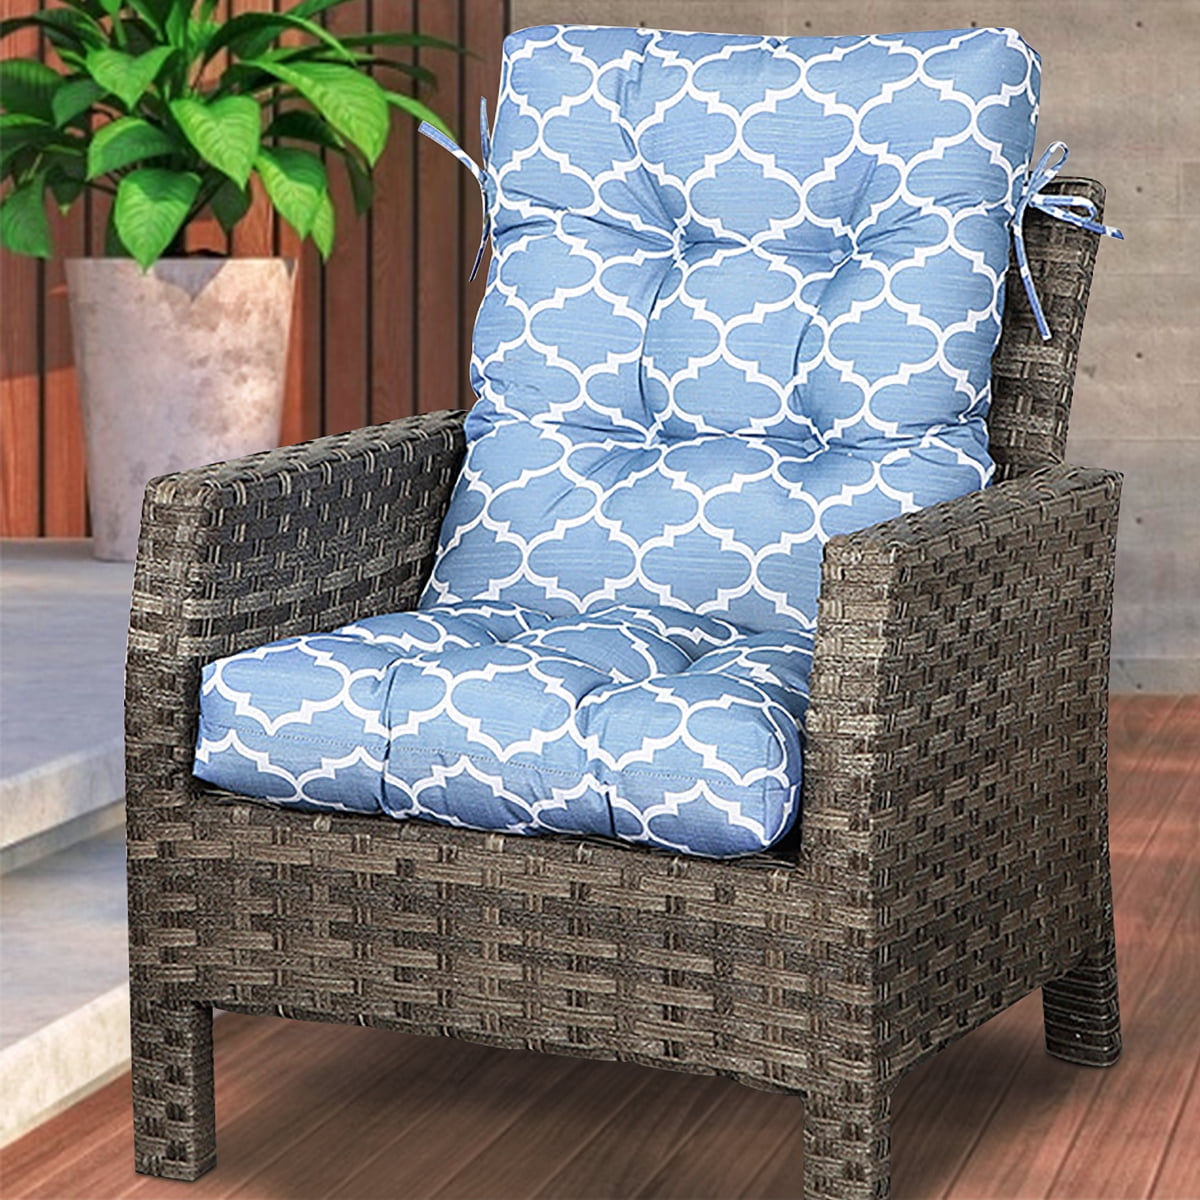  Patio Chair Cushions Clearance with Simple Decor